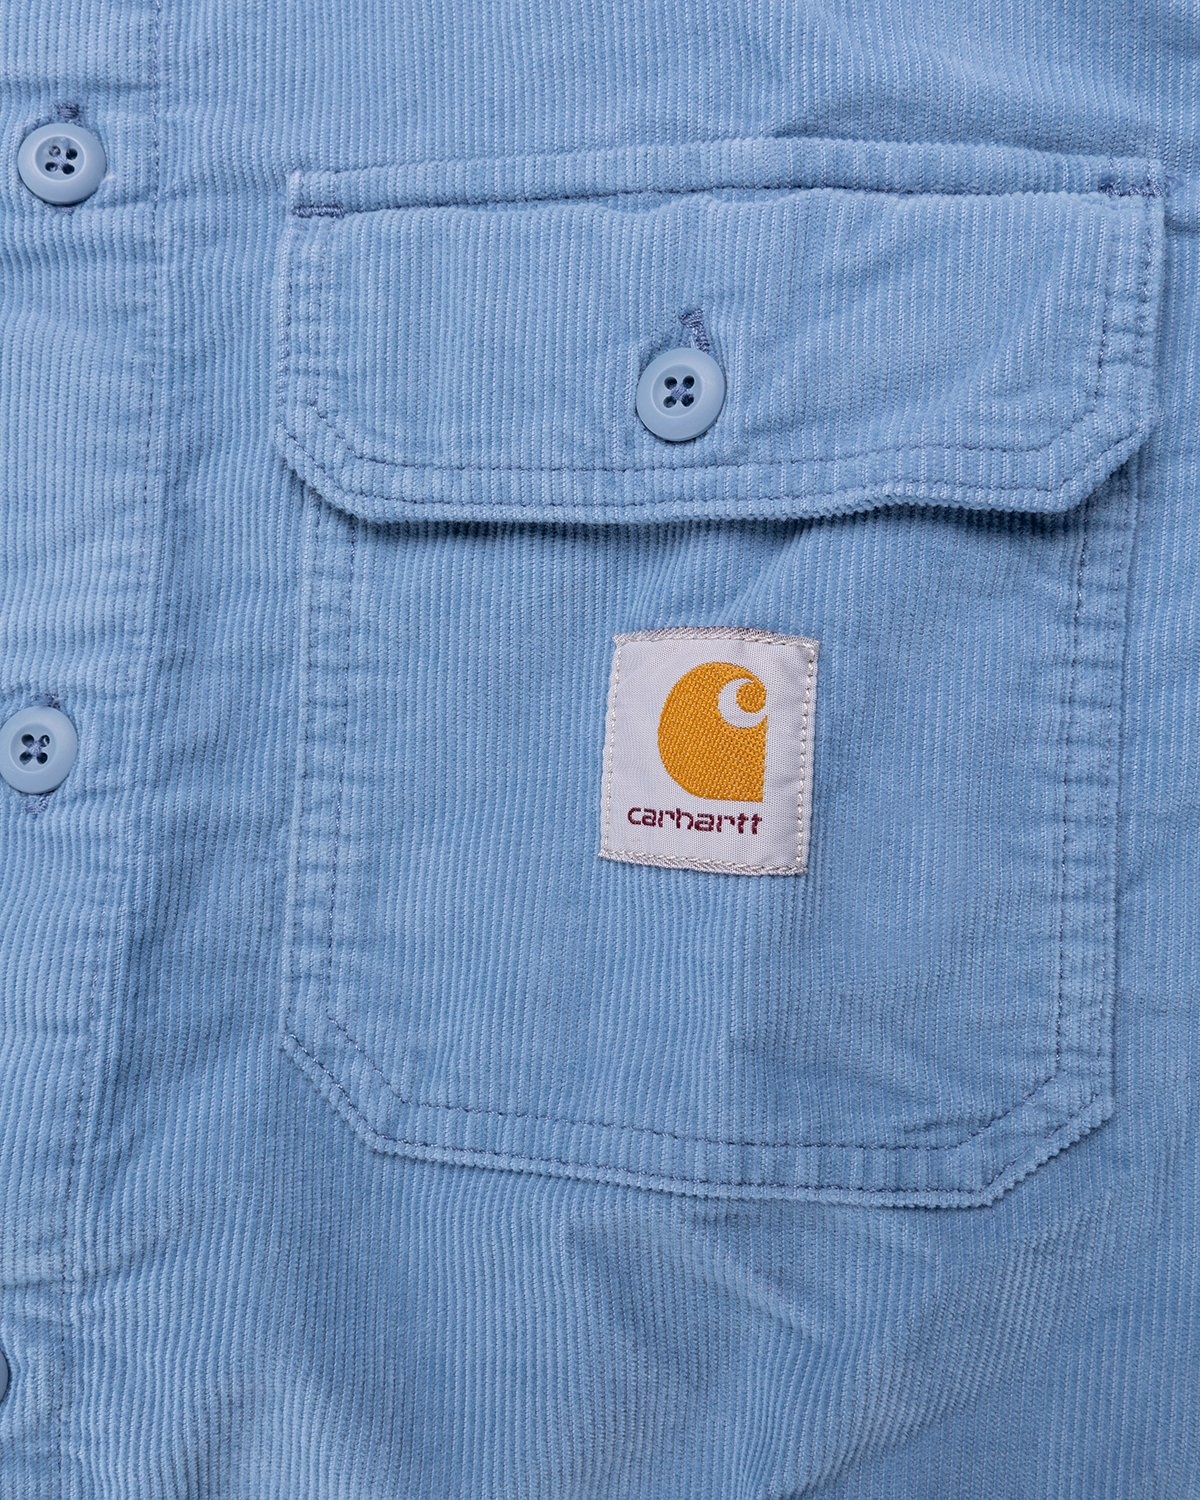 Carhartt WIP – Dixon Shirt Jacket Icy Water Rinsed - Overshirt - Blue - Image 6